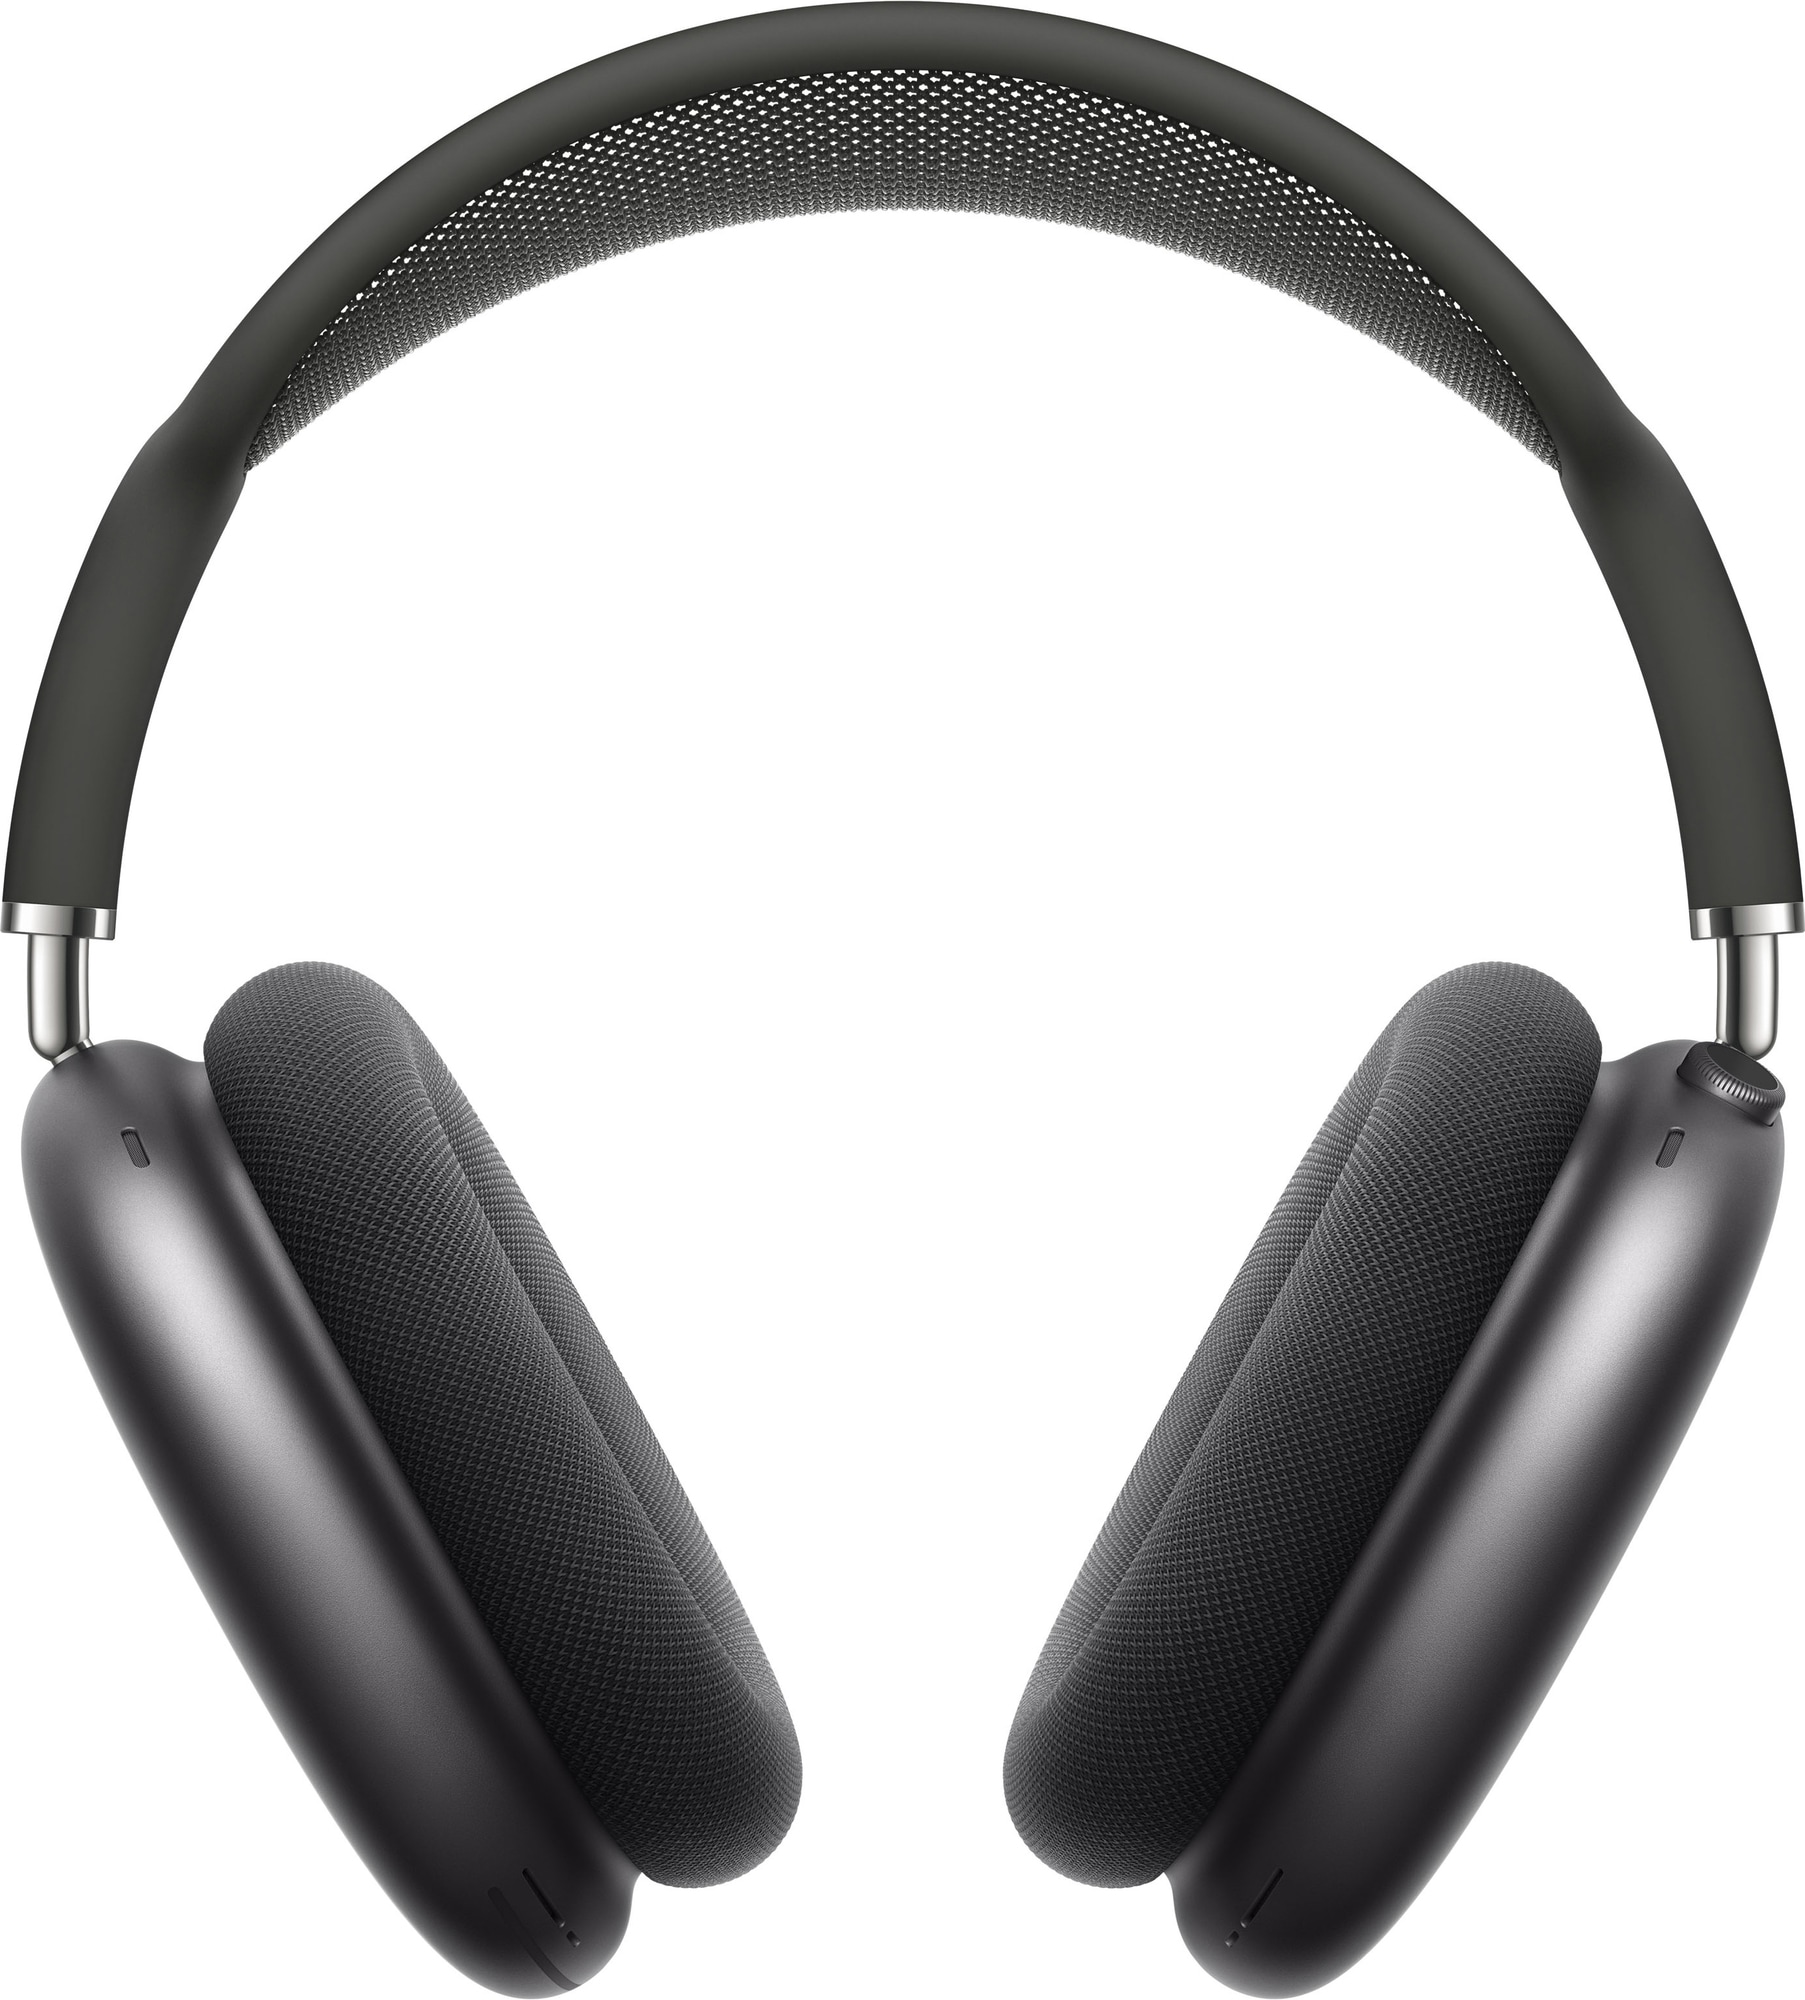 Apple AirPods Max trådlösa around ear-hörlurar (rymdgrå) - Hörlurar -  Elgiganten